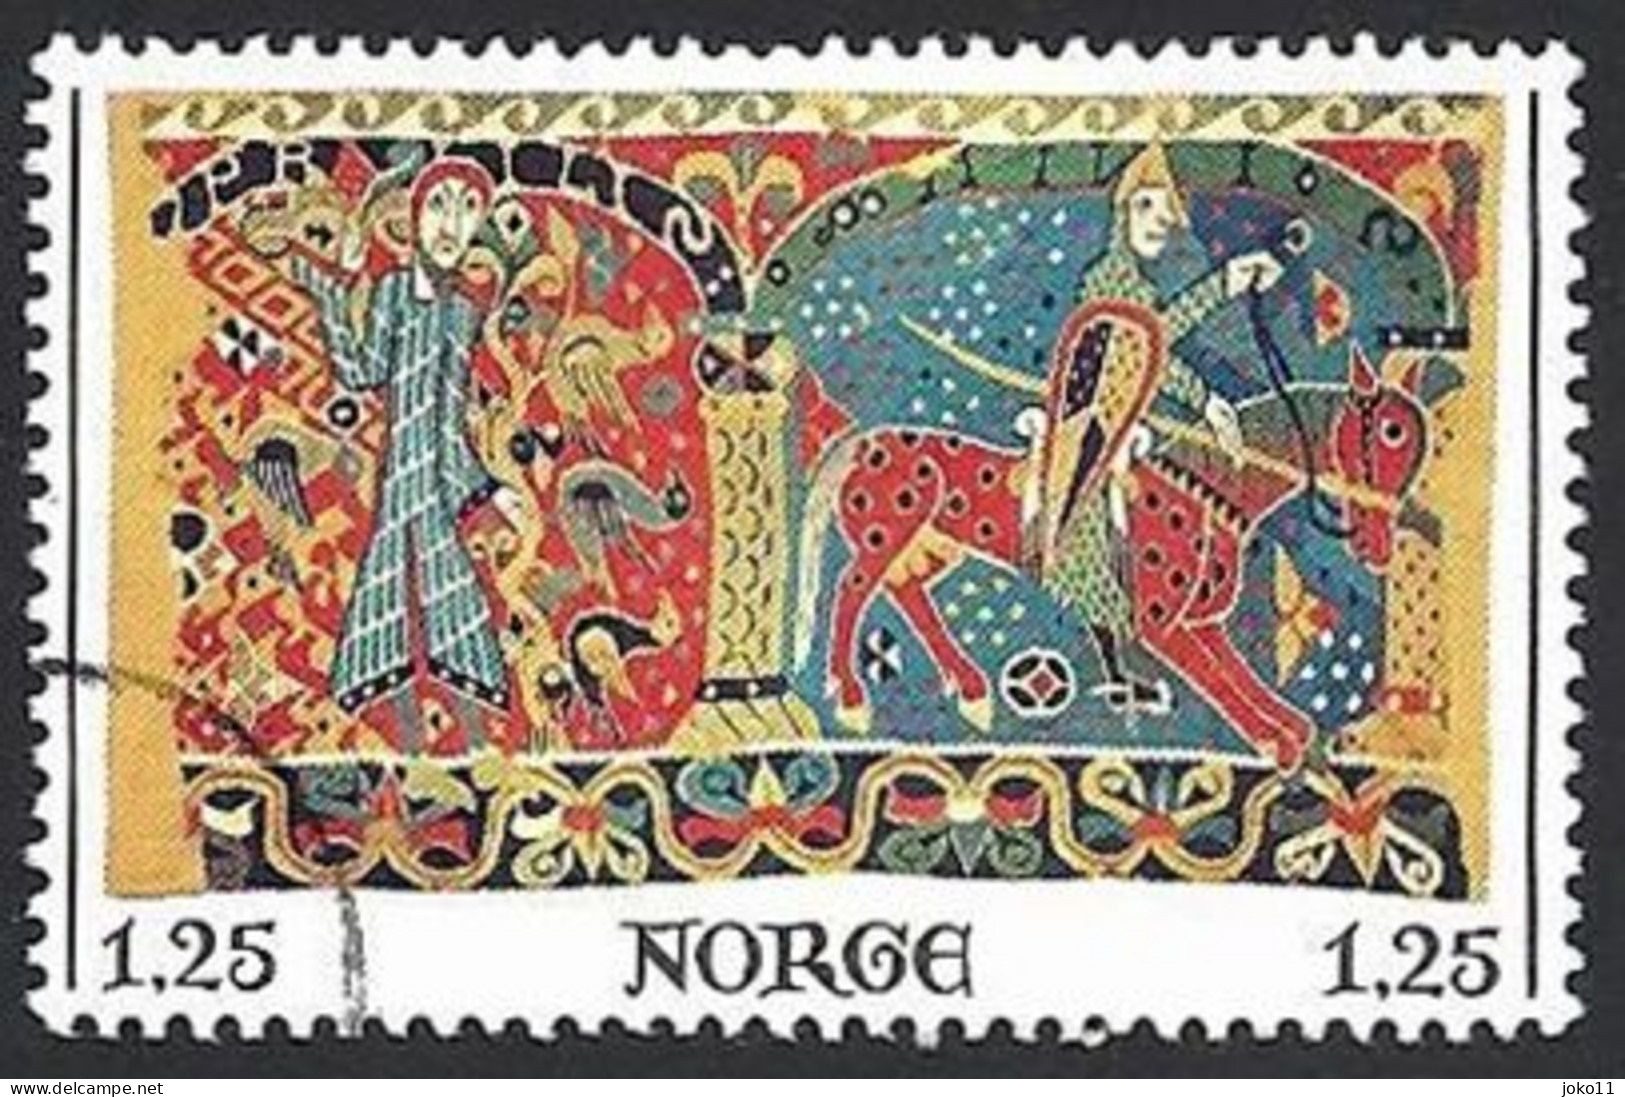 Norwegen, 1976, Mi.-Nr. 736, Gestempelt - Oblitérés